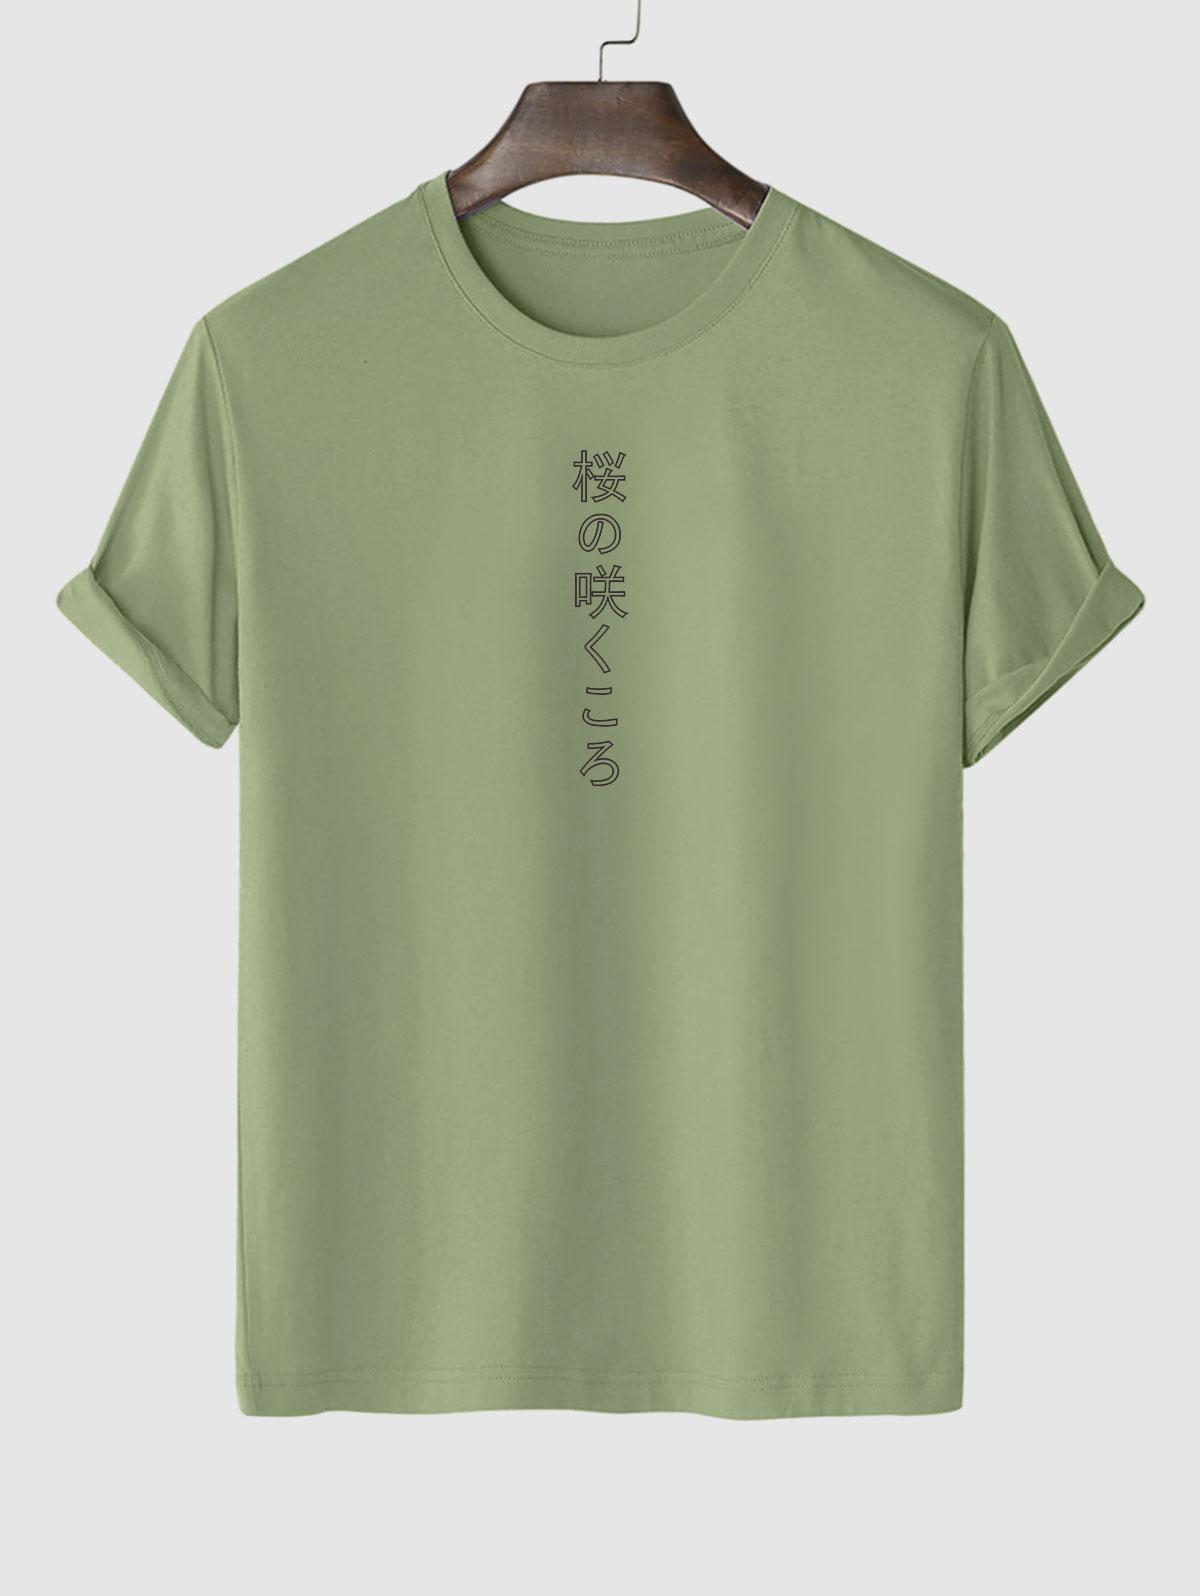 ZAFUL Men's Japanese Graphic Printed Short Sleeve T-shirt M Light green